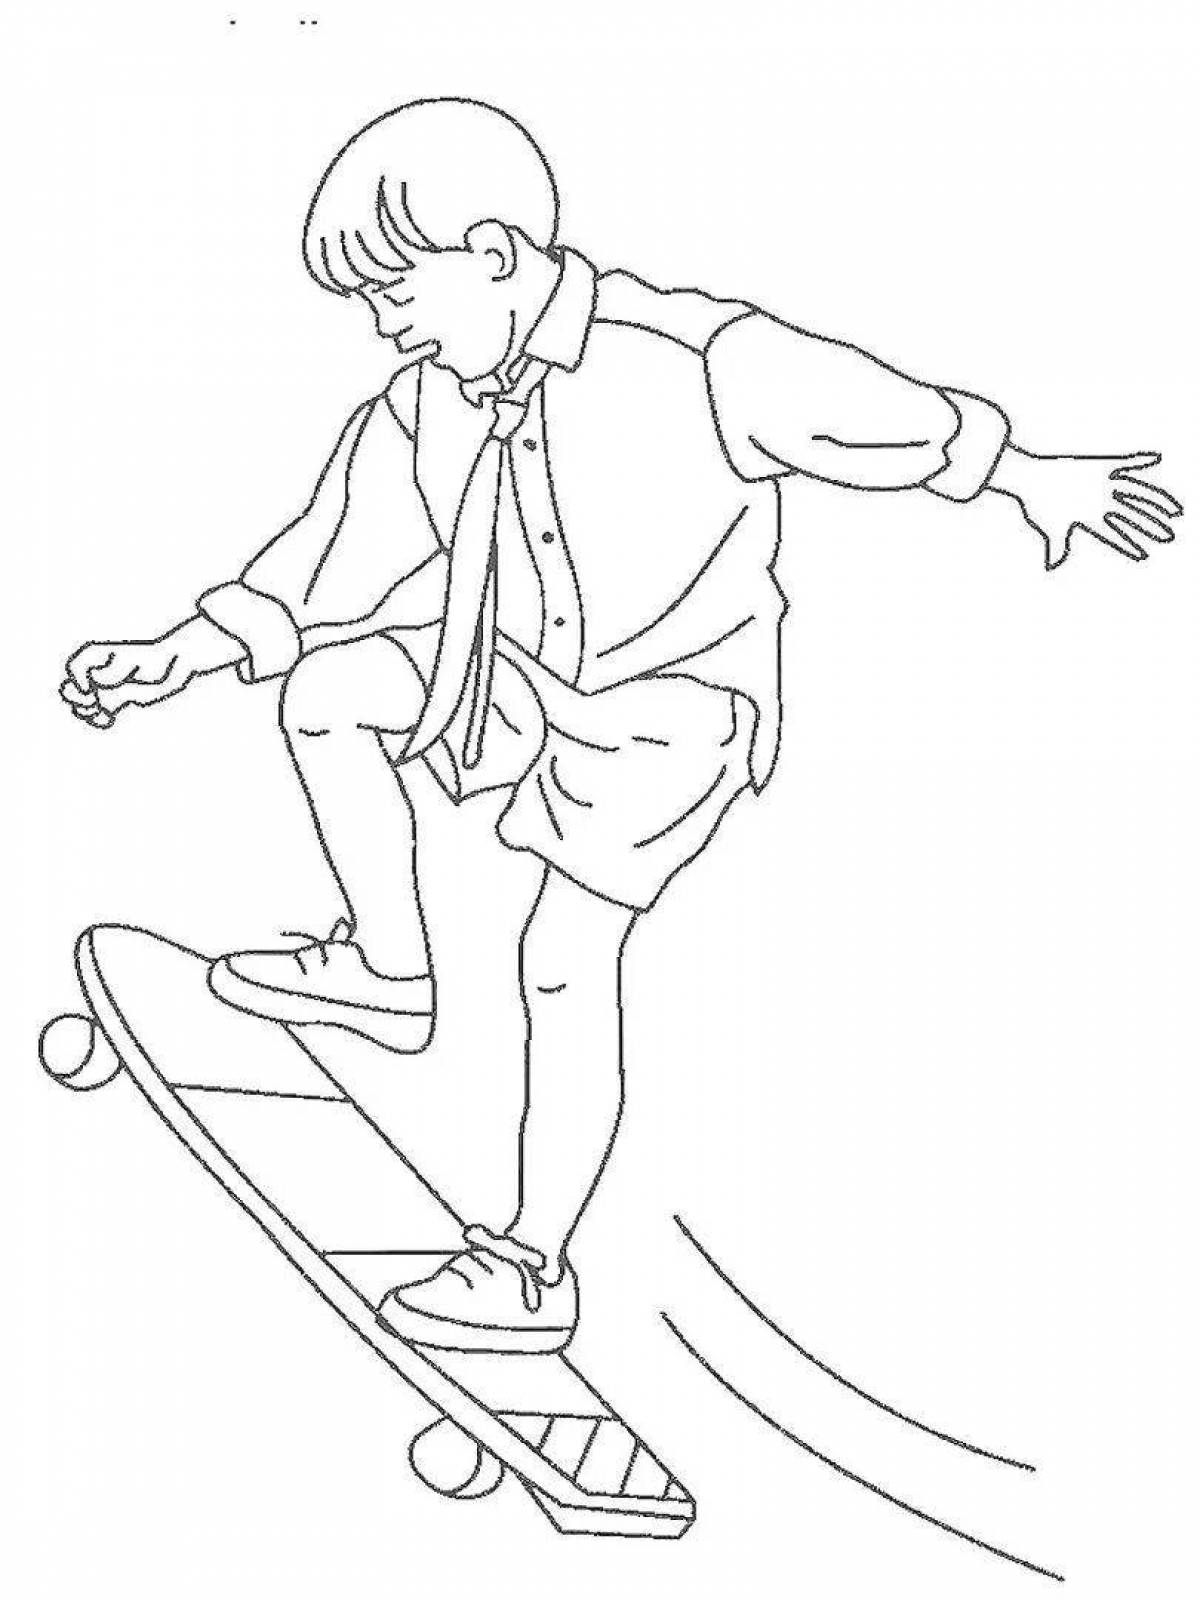 Fearless skateboard girl